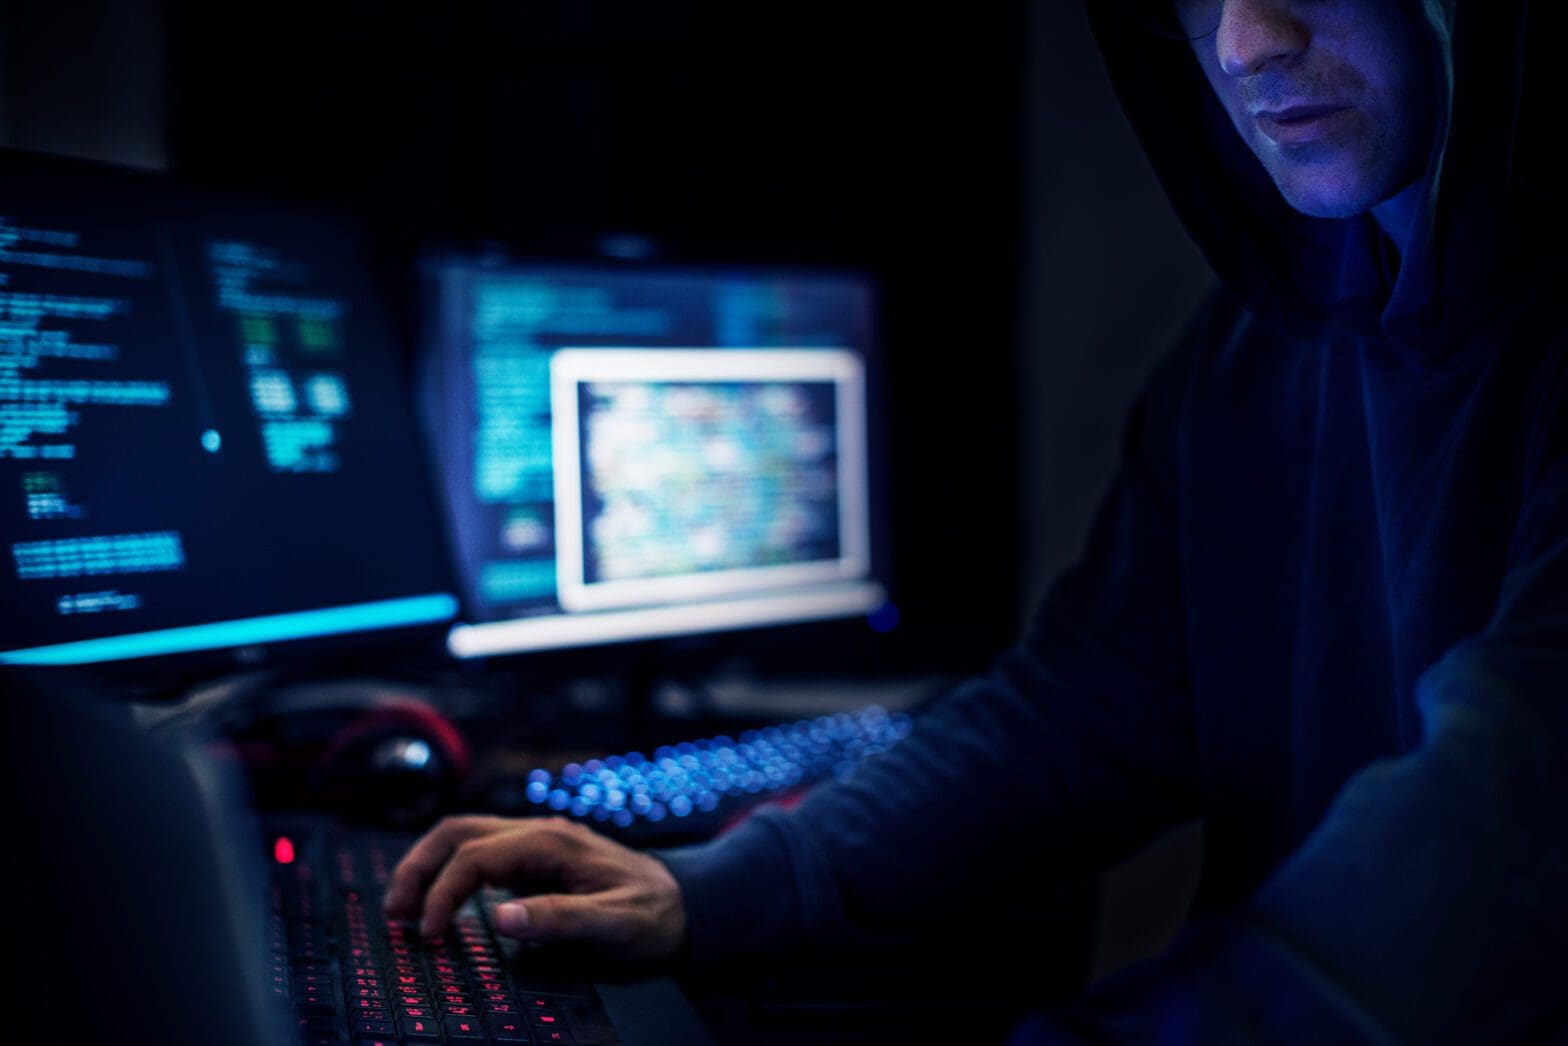 Hacker man working on computer